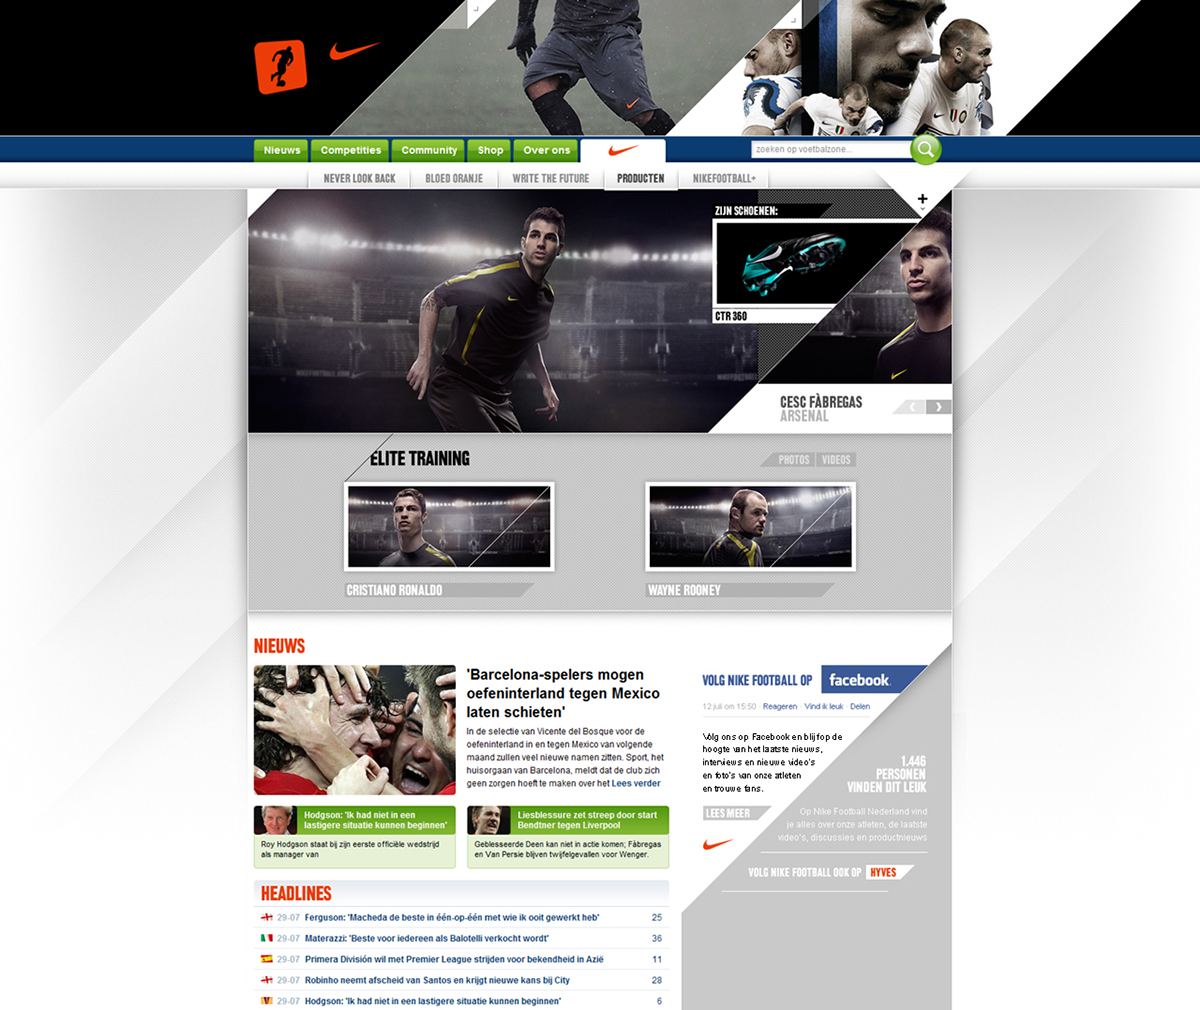 Nike Voetbalzone Pro Combat Smart ad social media twitter Swoosh battle campaign interface design nike football Sneijder Van der Vaart inter milan